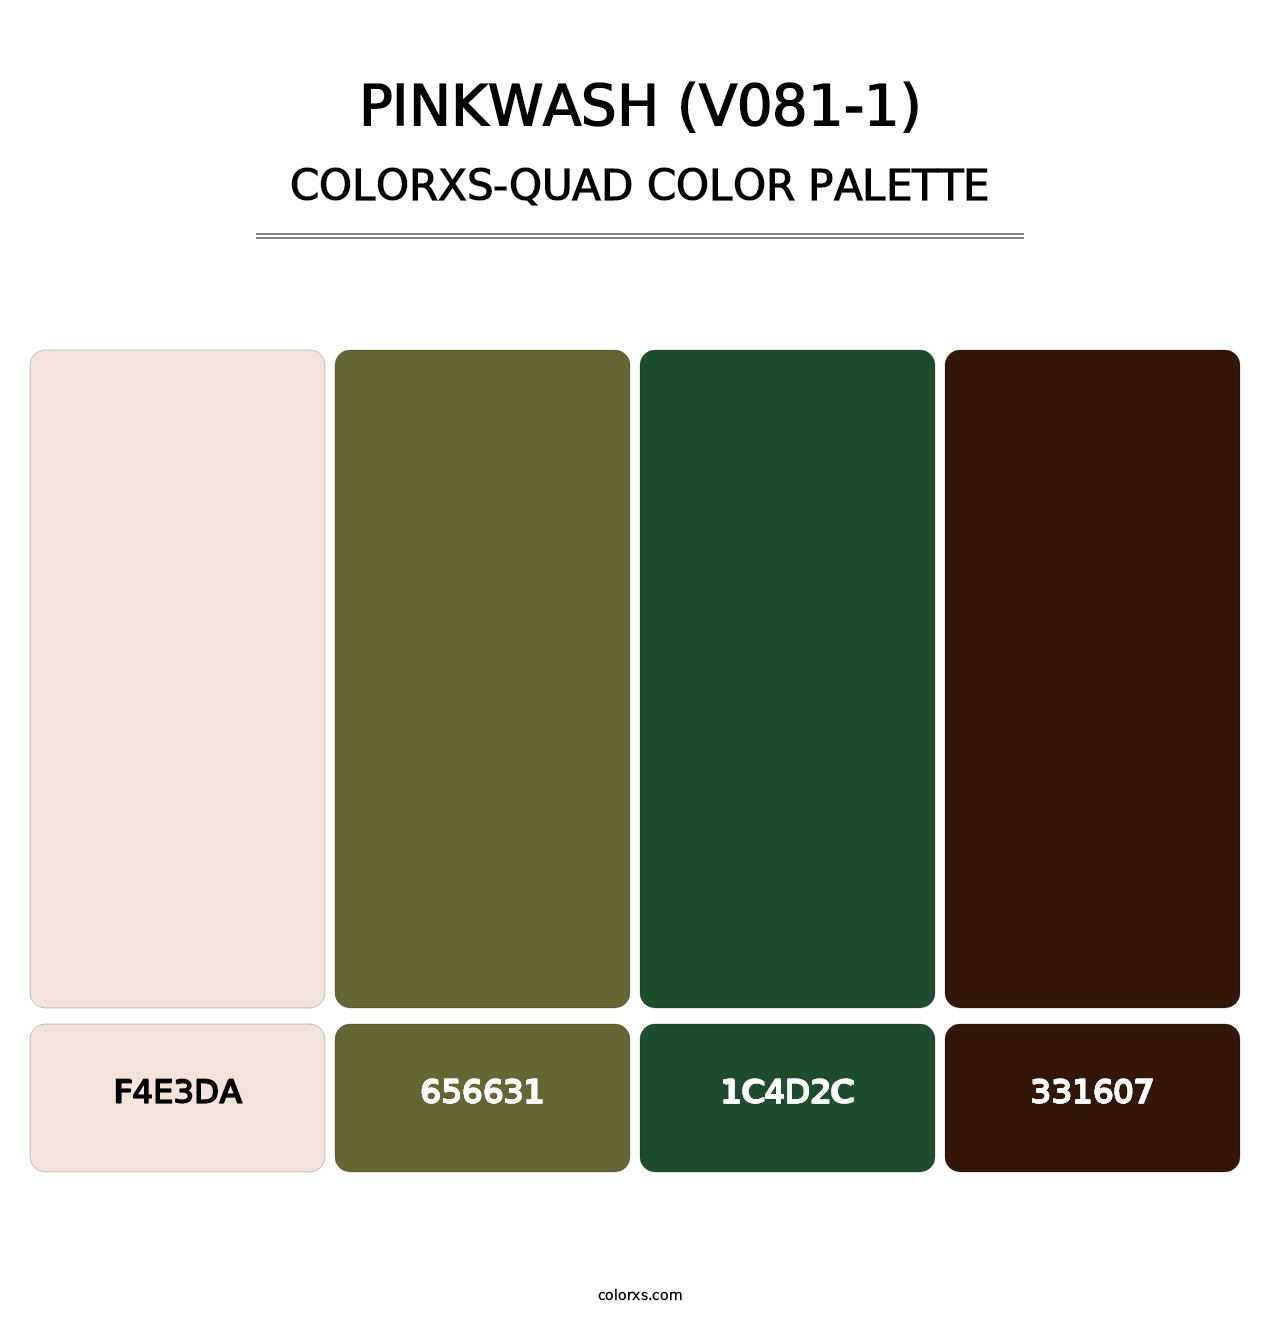 Pinkwash (V081-1) - Colorxs Quad Palette